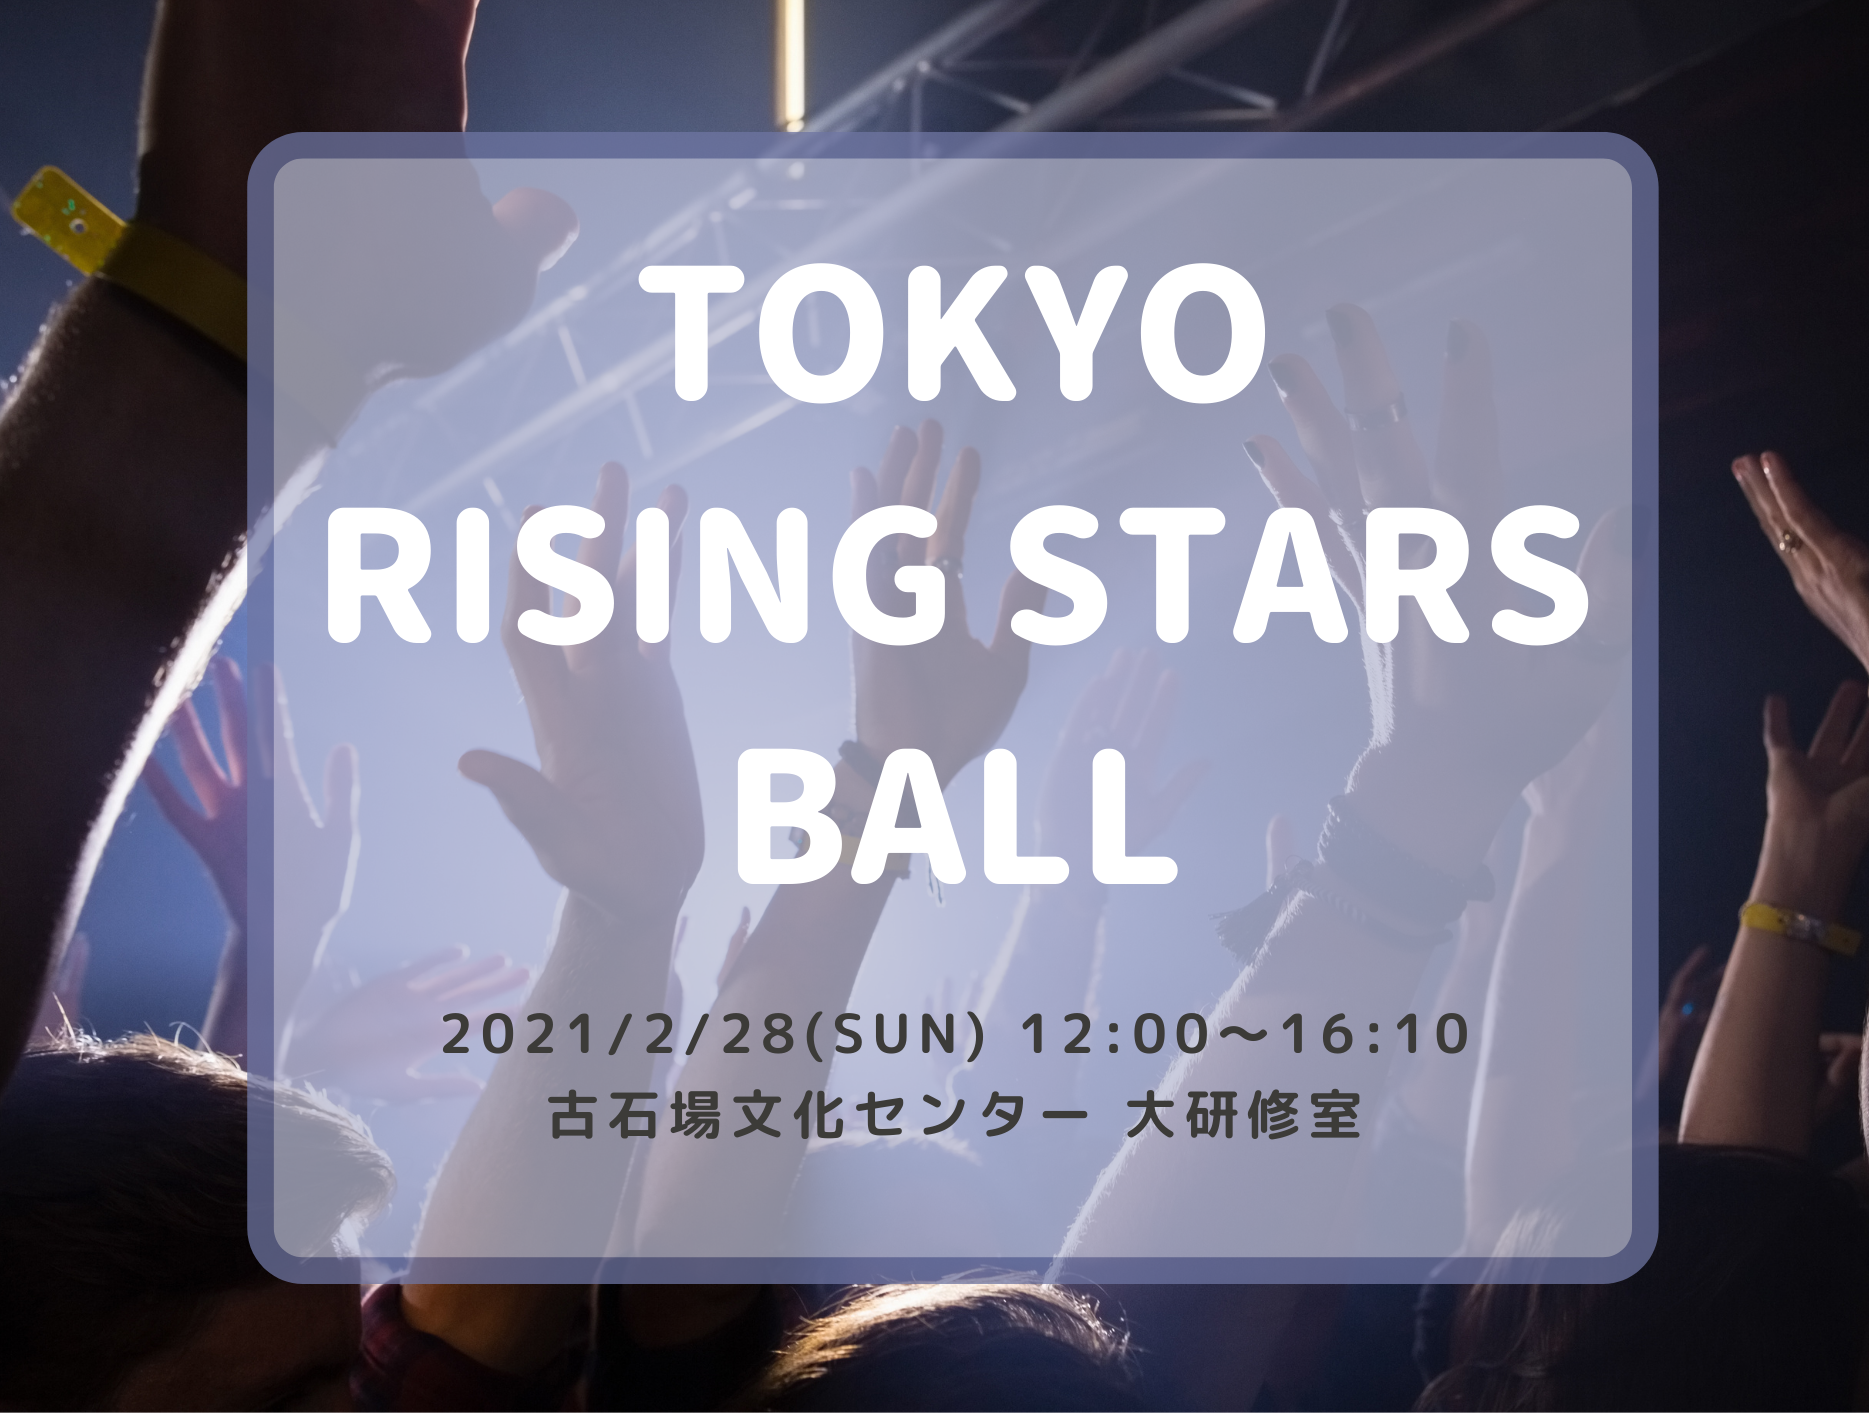 Tokyo Rising Stars Ball タイムテーブル 発表！